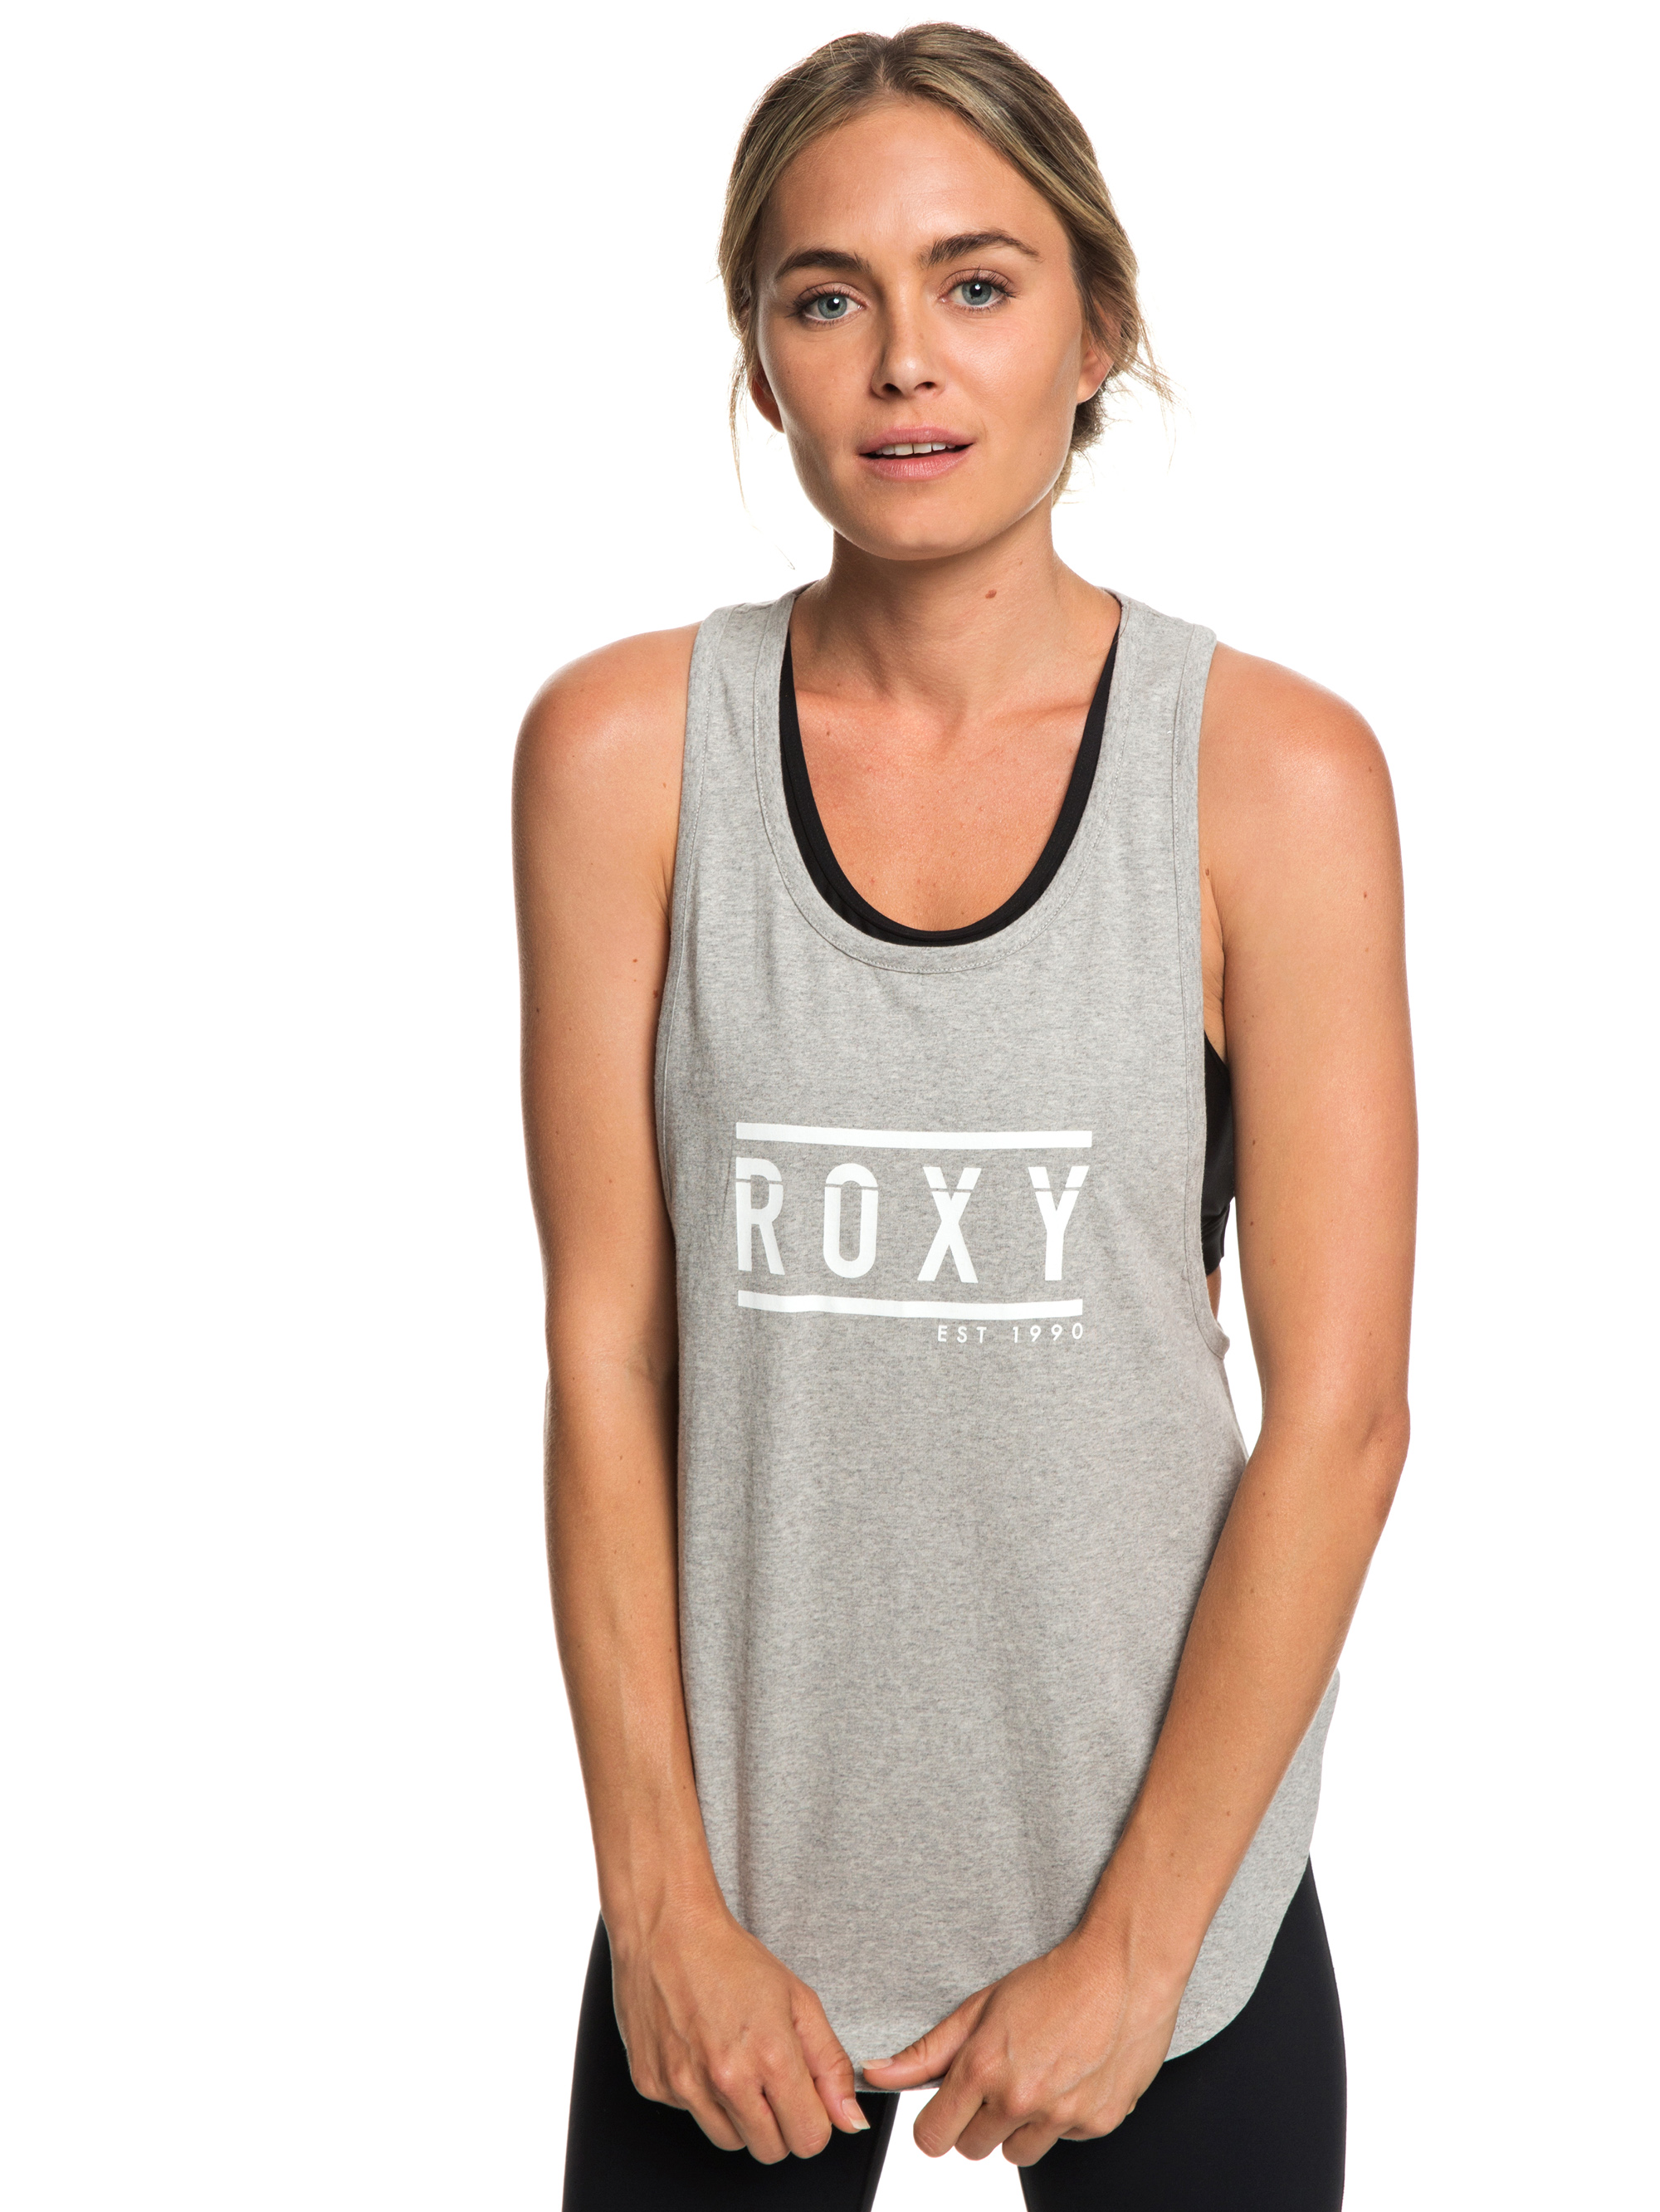 Рокси лайт. Жилетка Roxy. Roxy Light necked. Рокси Лайт грудь в белой футболке.